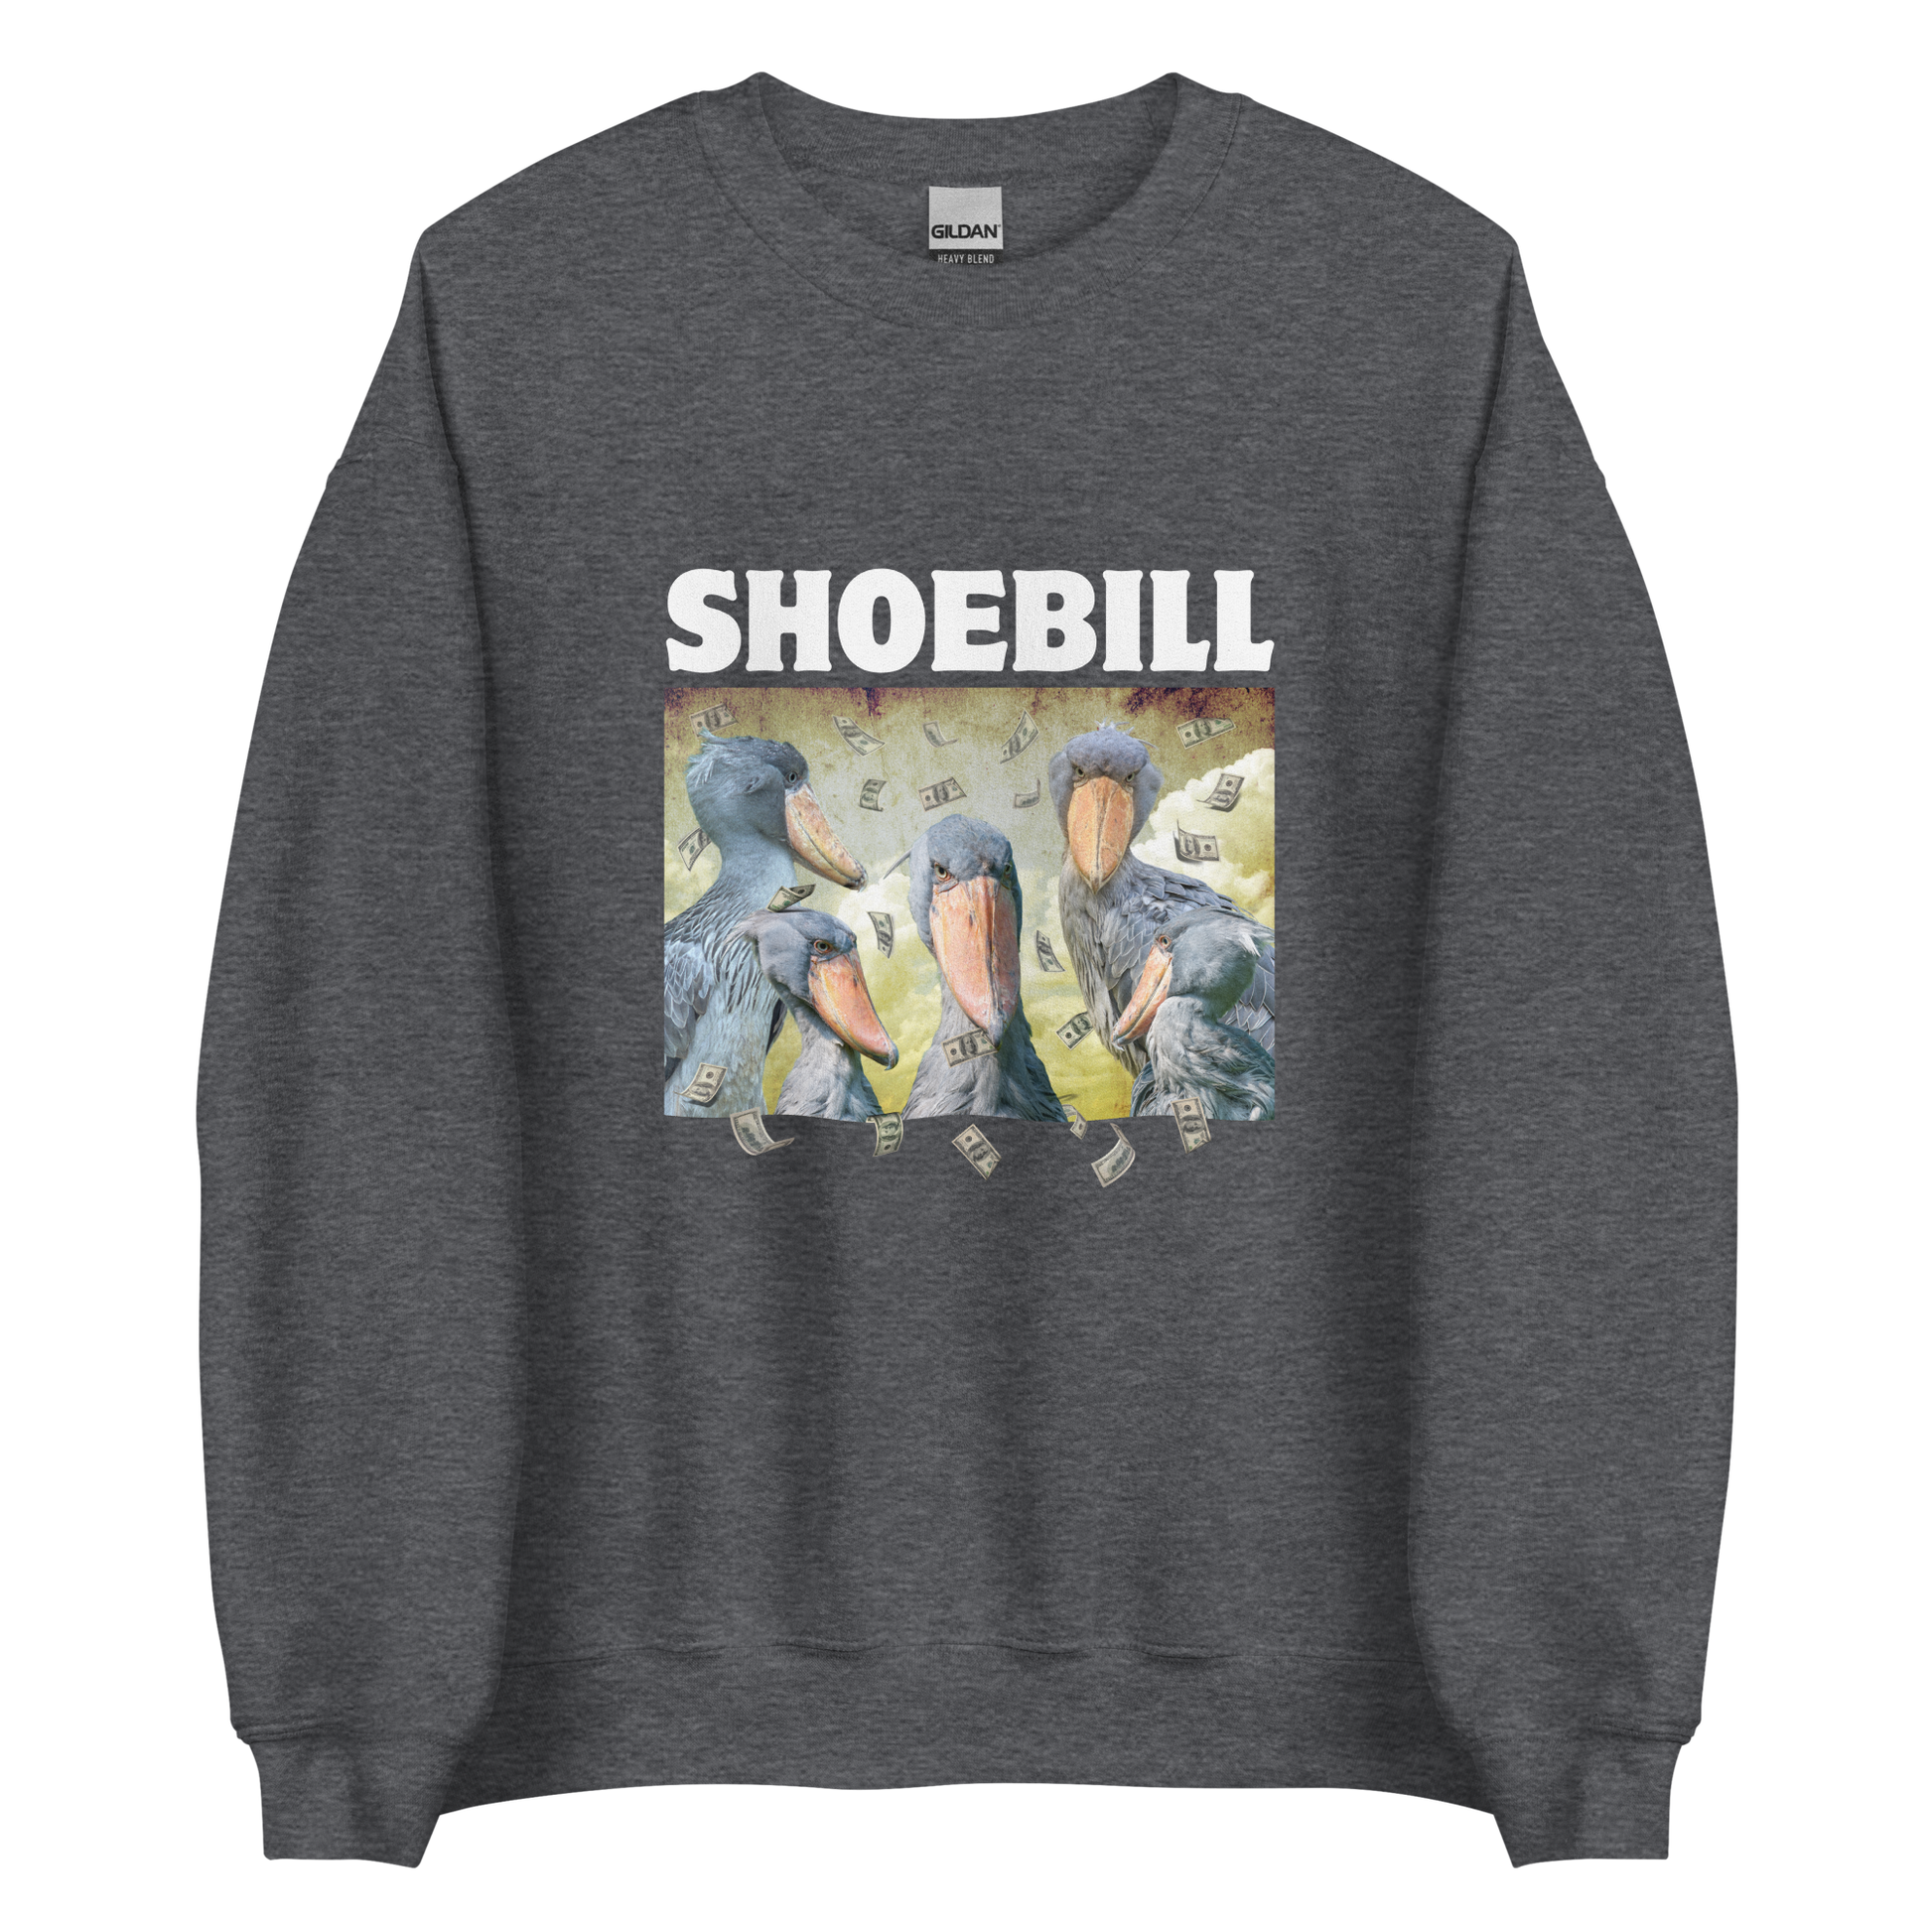 Dark Heather Shoebill Sweatshirt featuring a cool Shoebill graphic on the chest - Artsy/Funny Graphic Shoebill Stork Sweatshirts - Boozy Fox